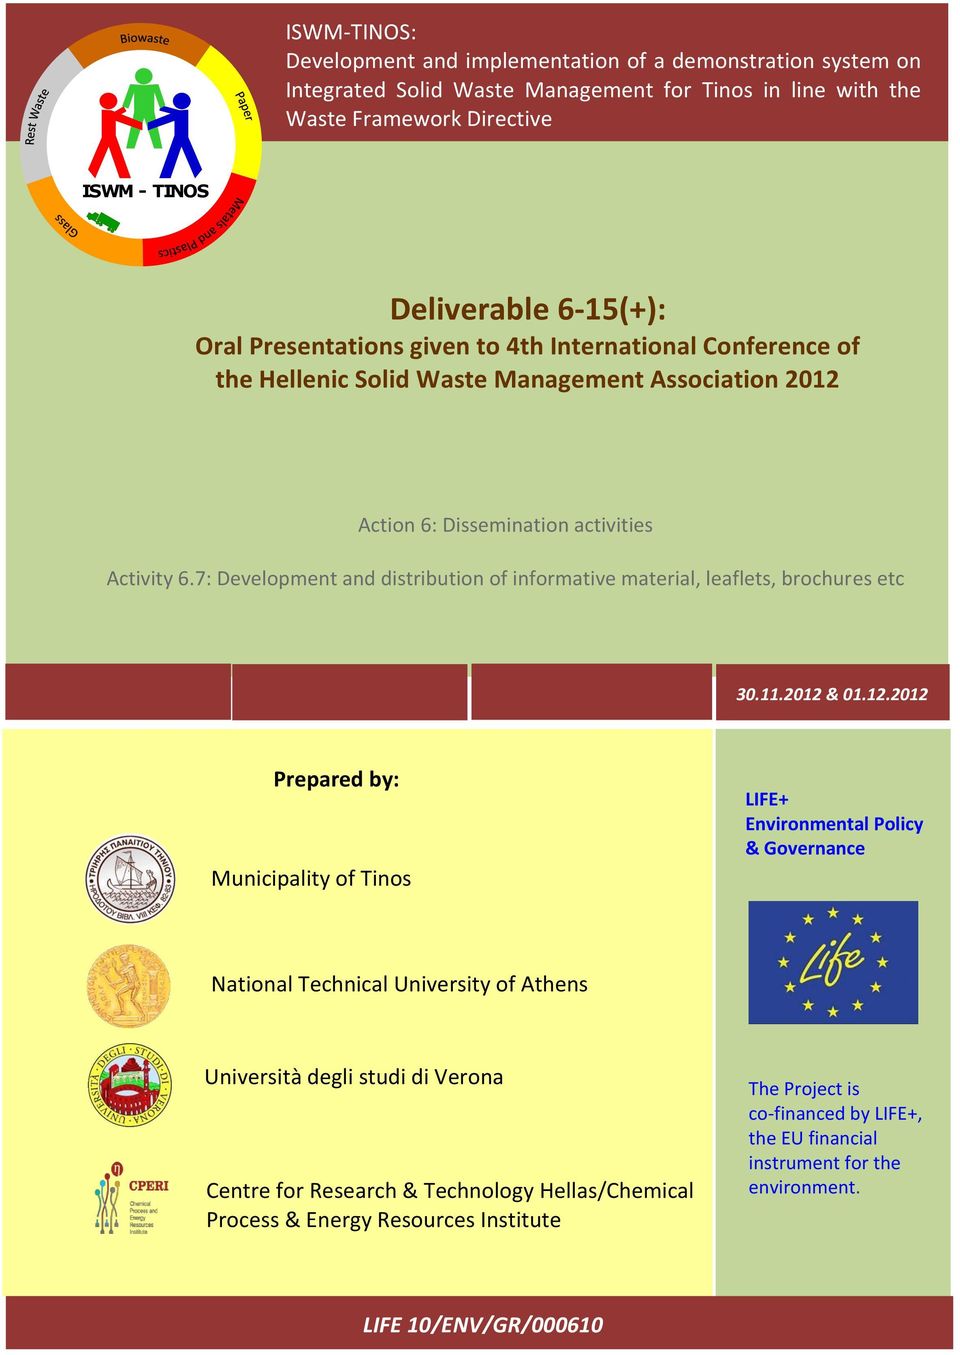 7: Development and distribution of informative material, leaflets, brochures etc 30.11.2012 